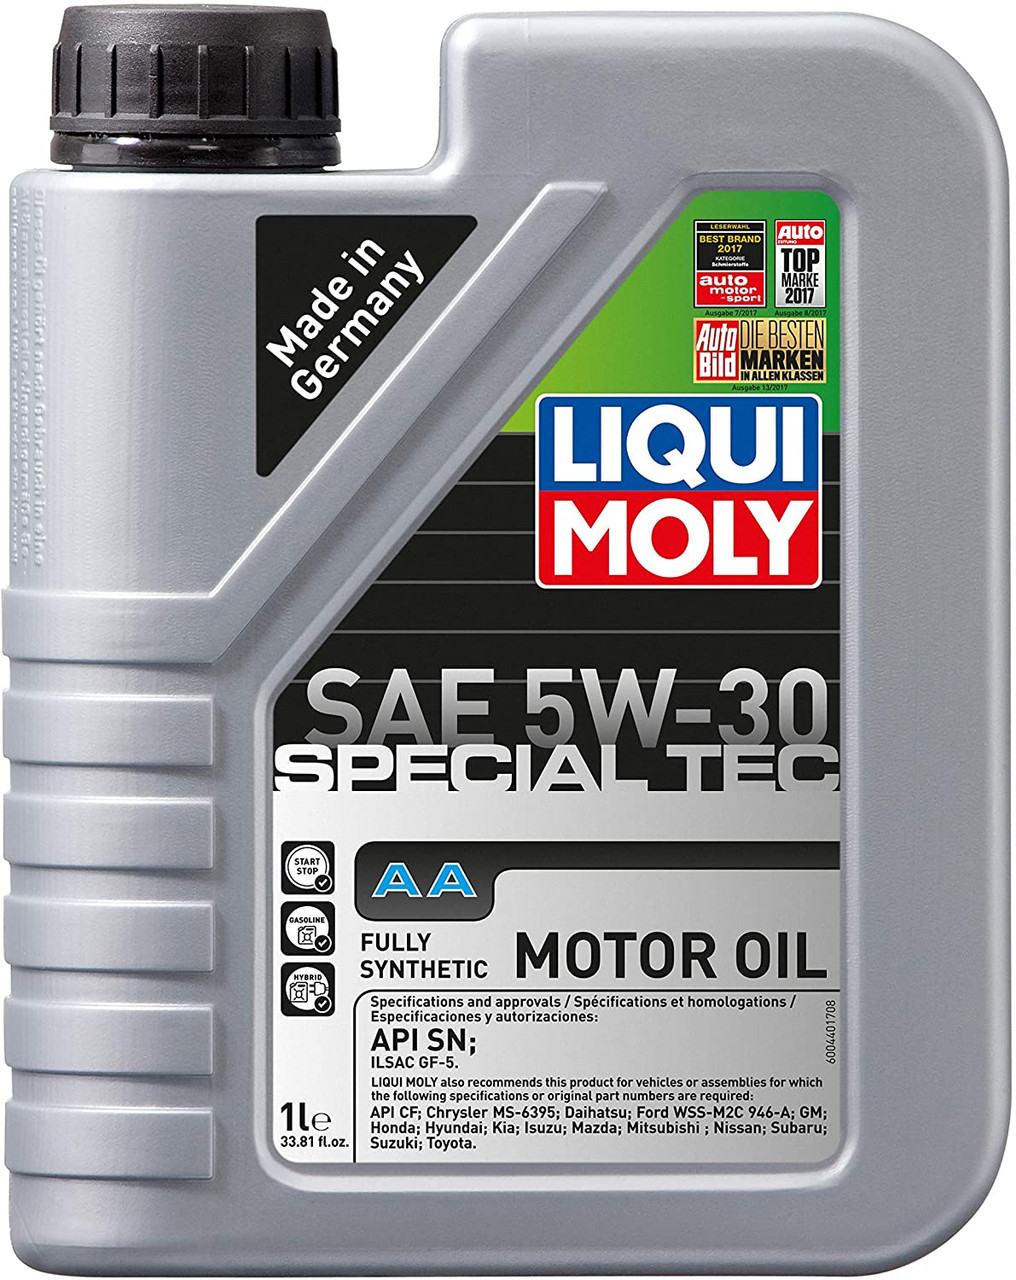 Liqui Moly Special Tec AA 5W30 Engine Oil (1 Liter) - 20136 - GenRacer